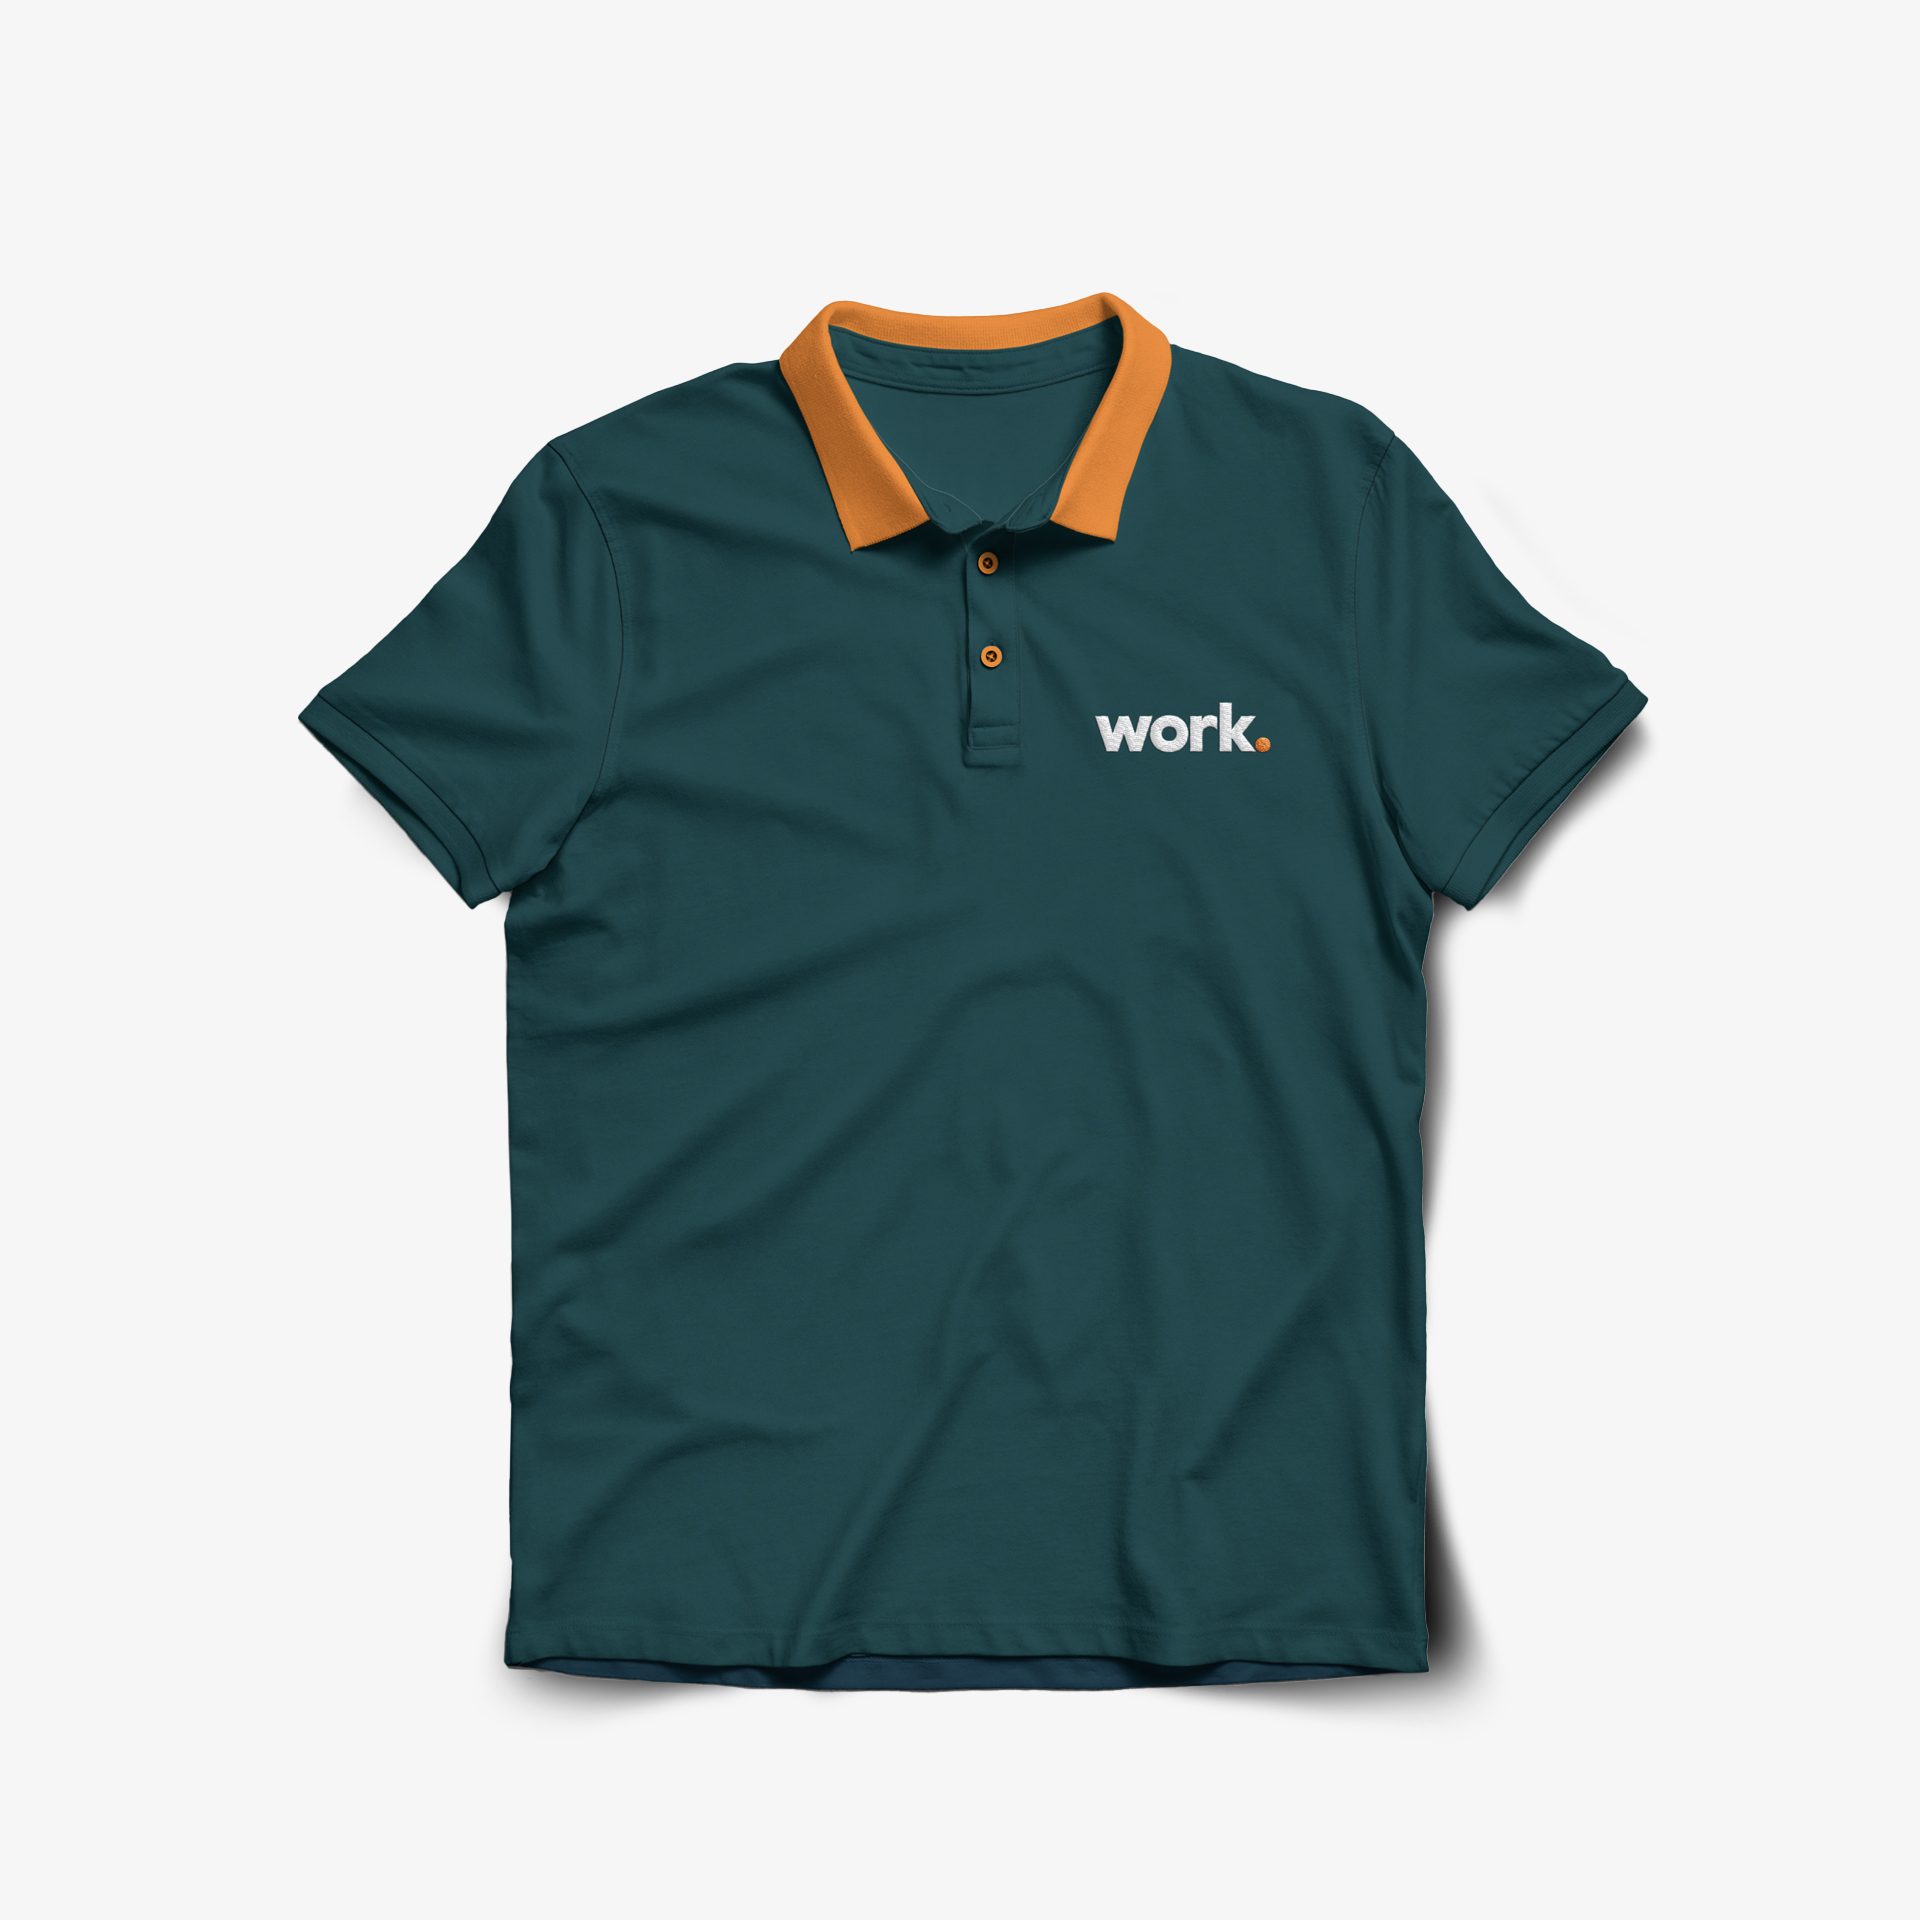 Work polo shirt